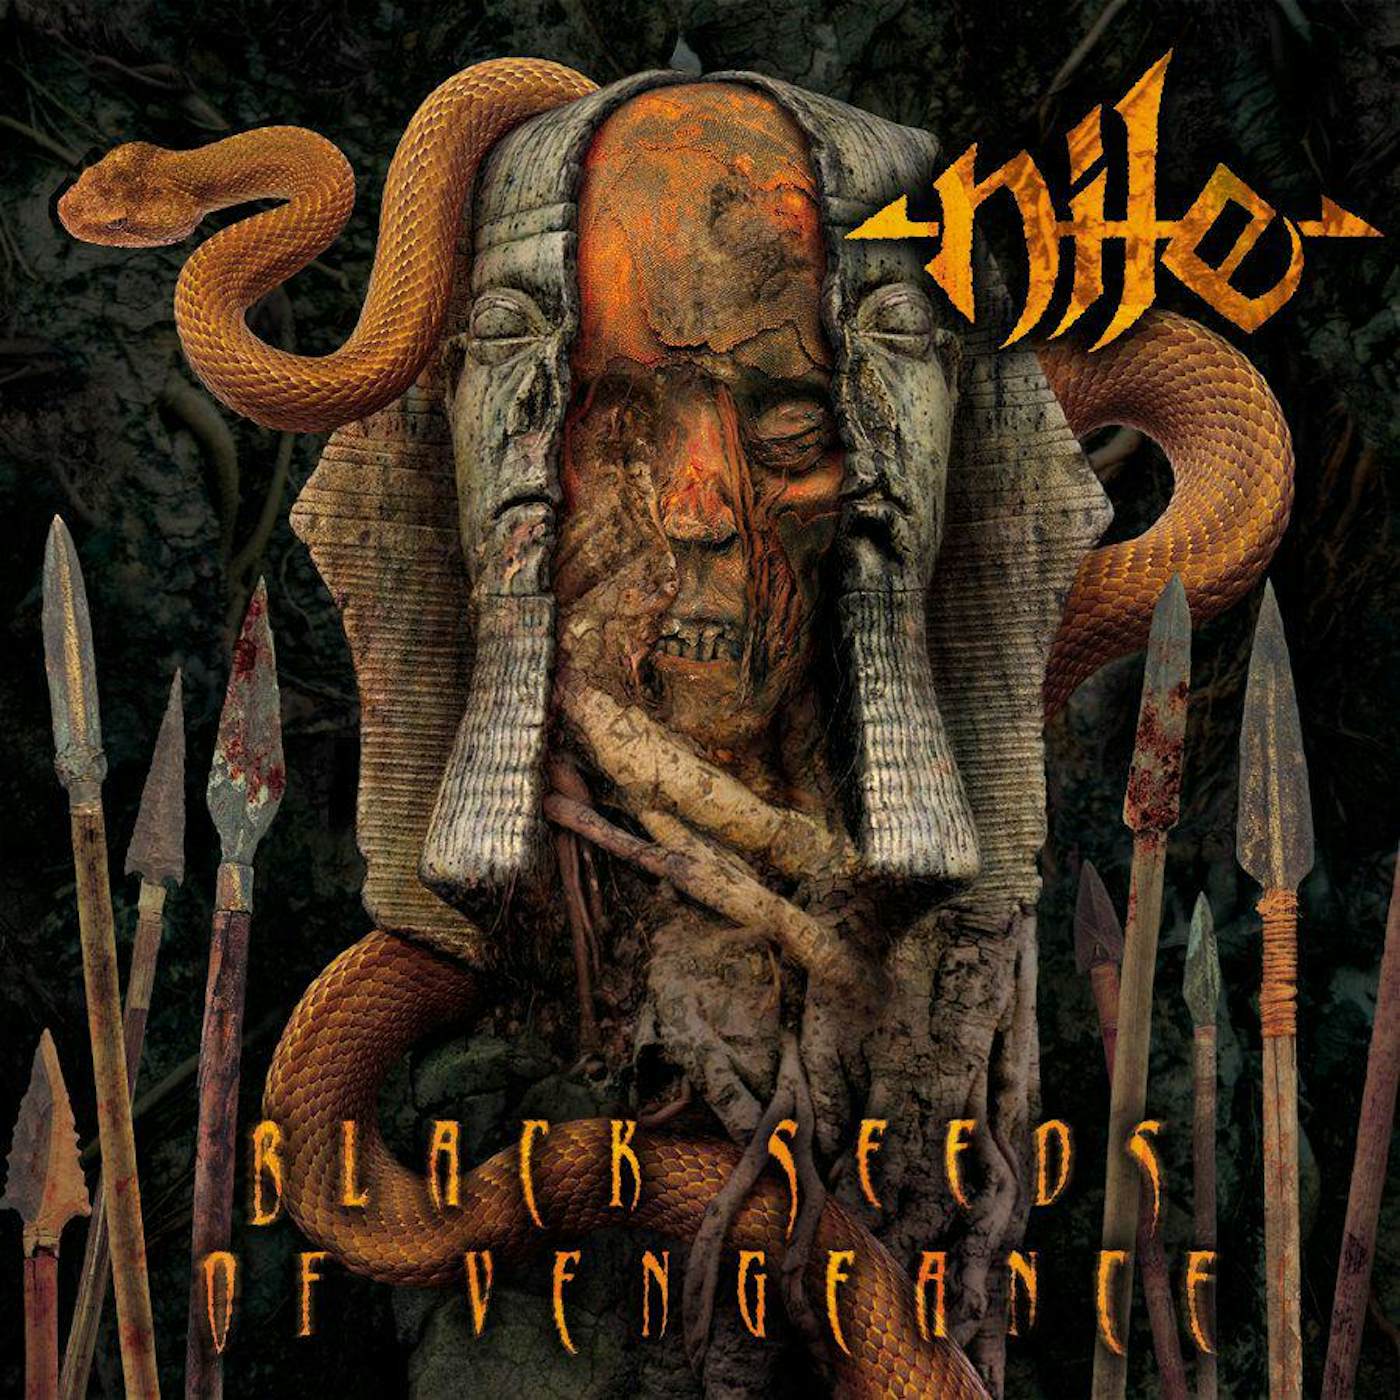 Nile Black Seeds Of Vengeance Vinyl Record